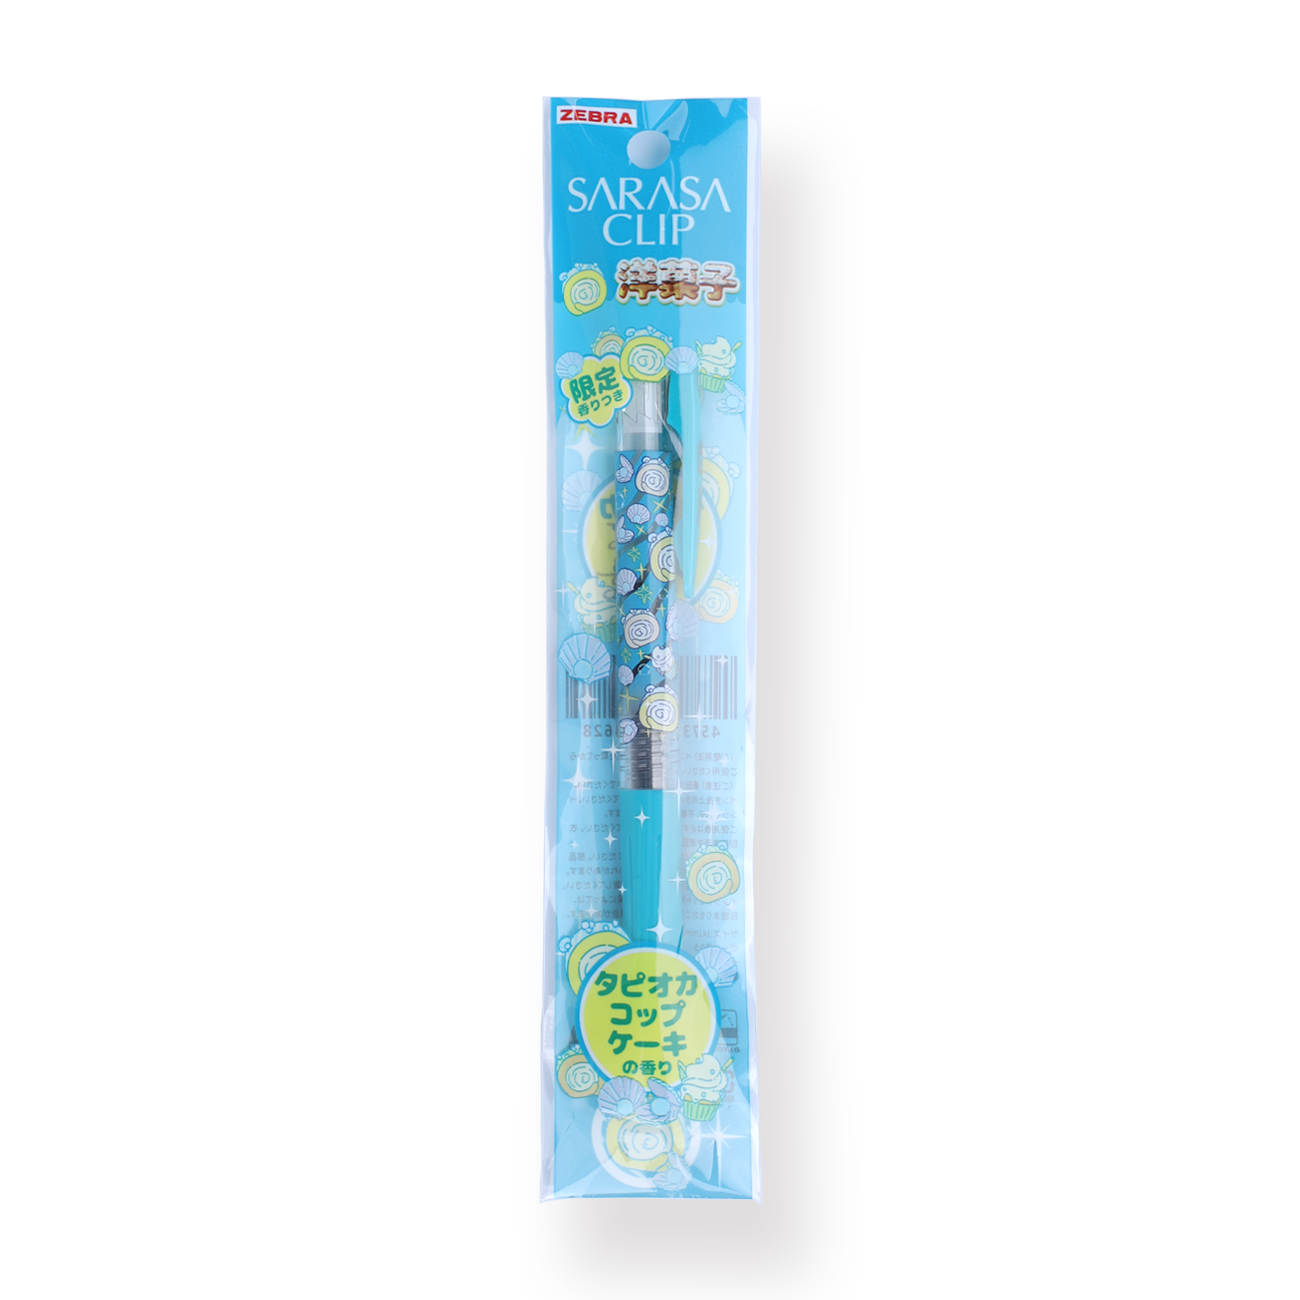 Zebra Sarasa Clip Limited Edition Gel Pen - 0.5 mm - Western Confectionery Series - Green Body